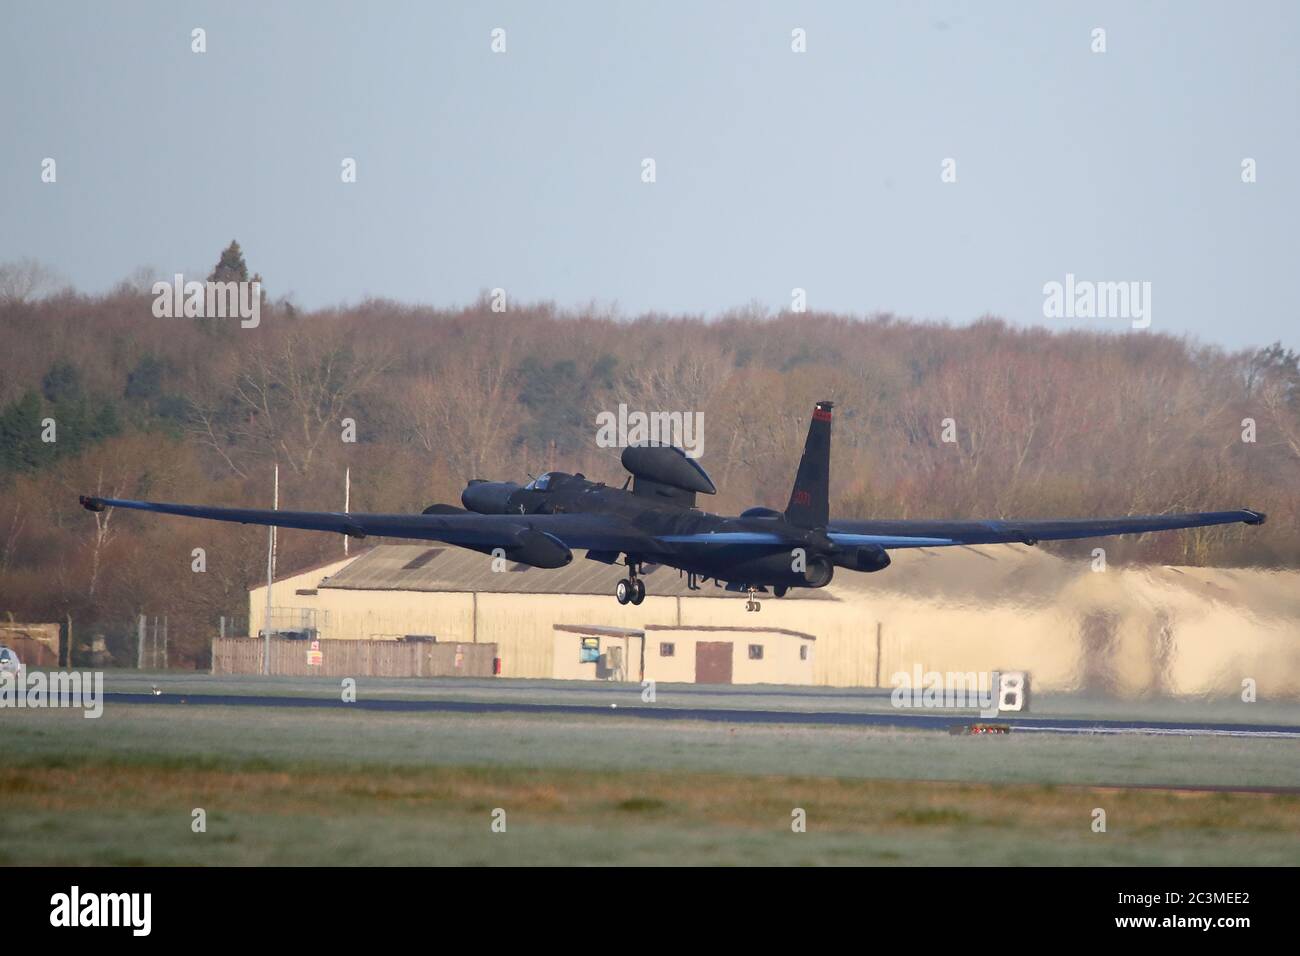 An American Lockheed U-2S spy plane taking off at RAF Fairford, UK Stock Photo